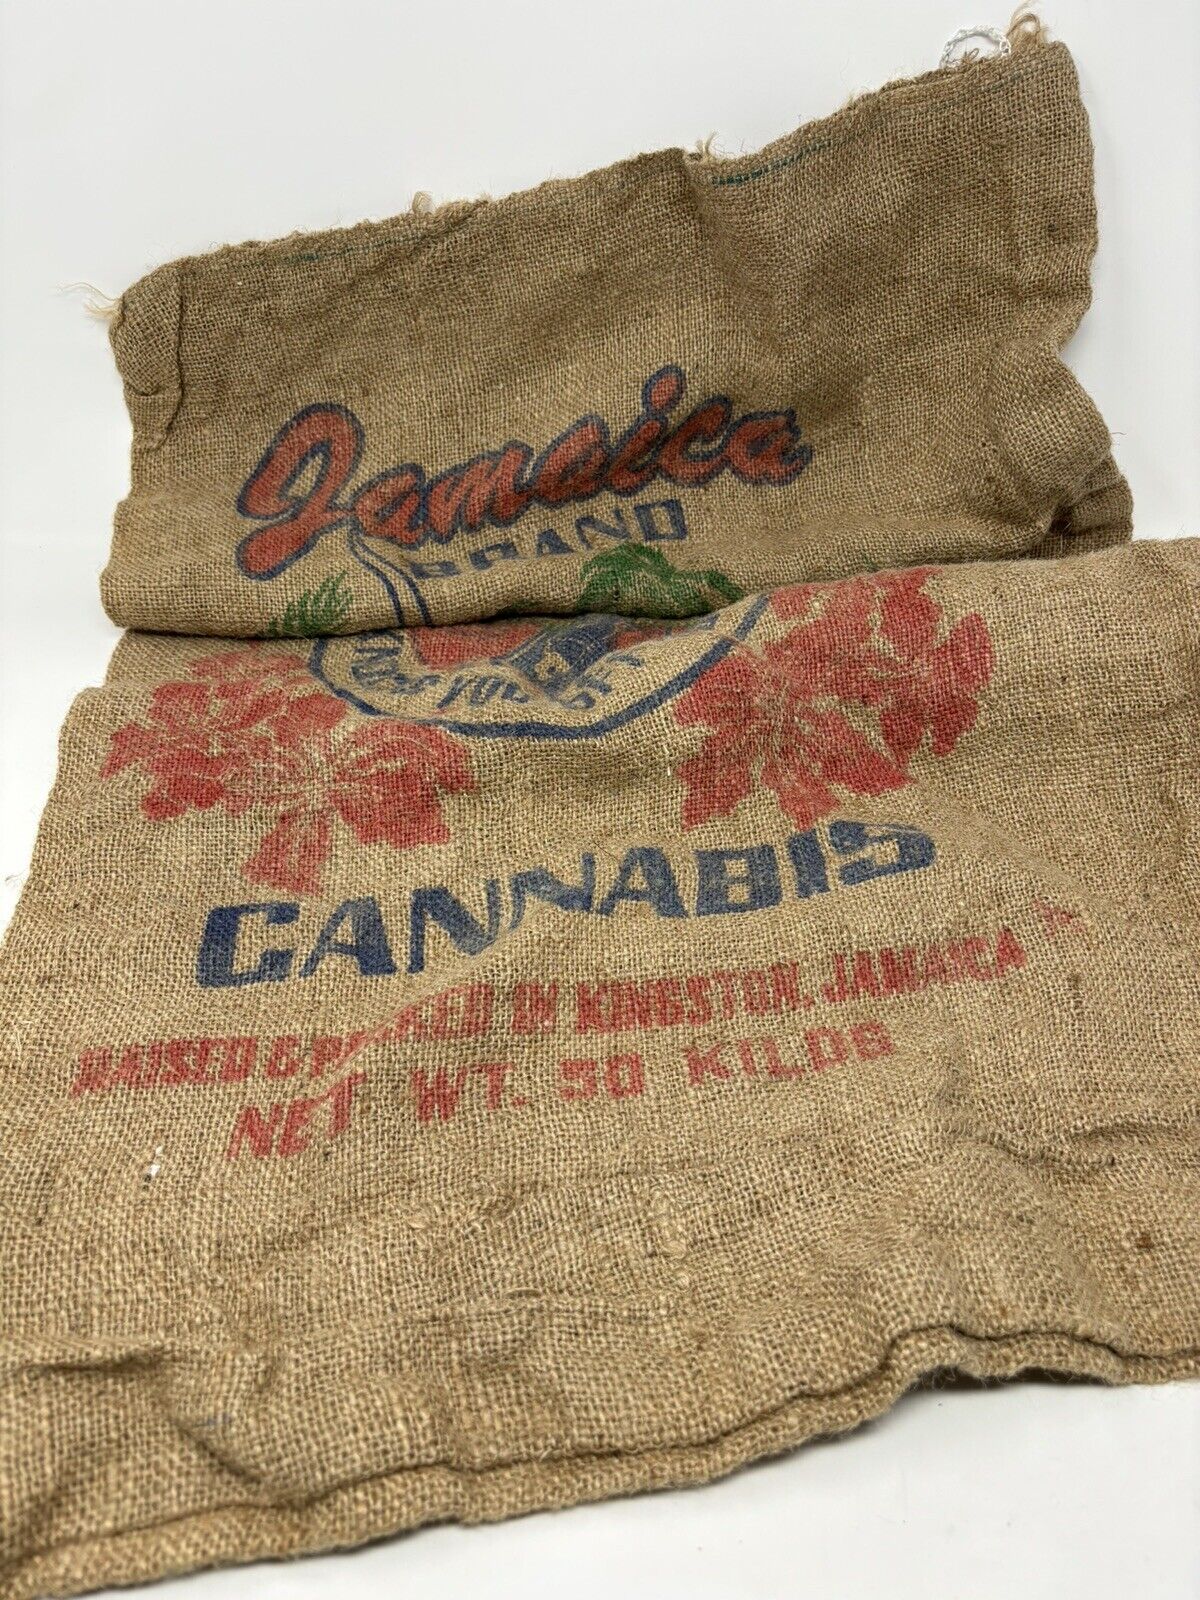 Vintage 90s Novelty Burlap Sack Cannabis Marijuana Bag Kingston Jamaica